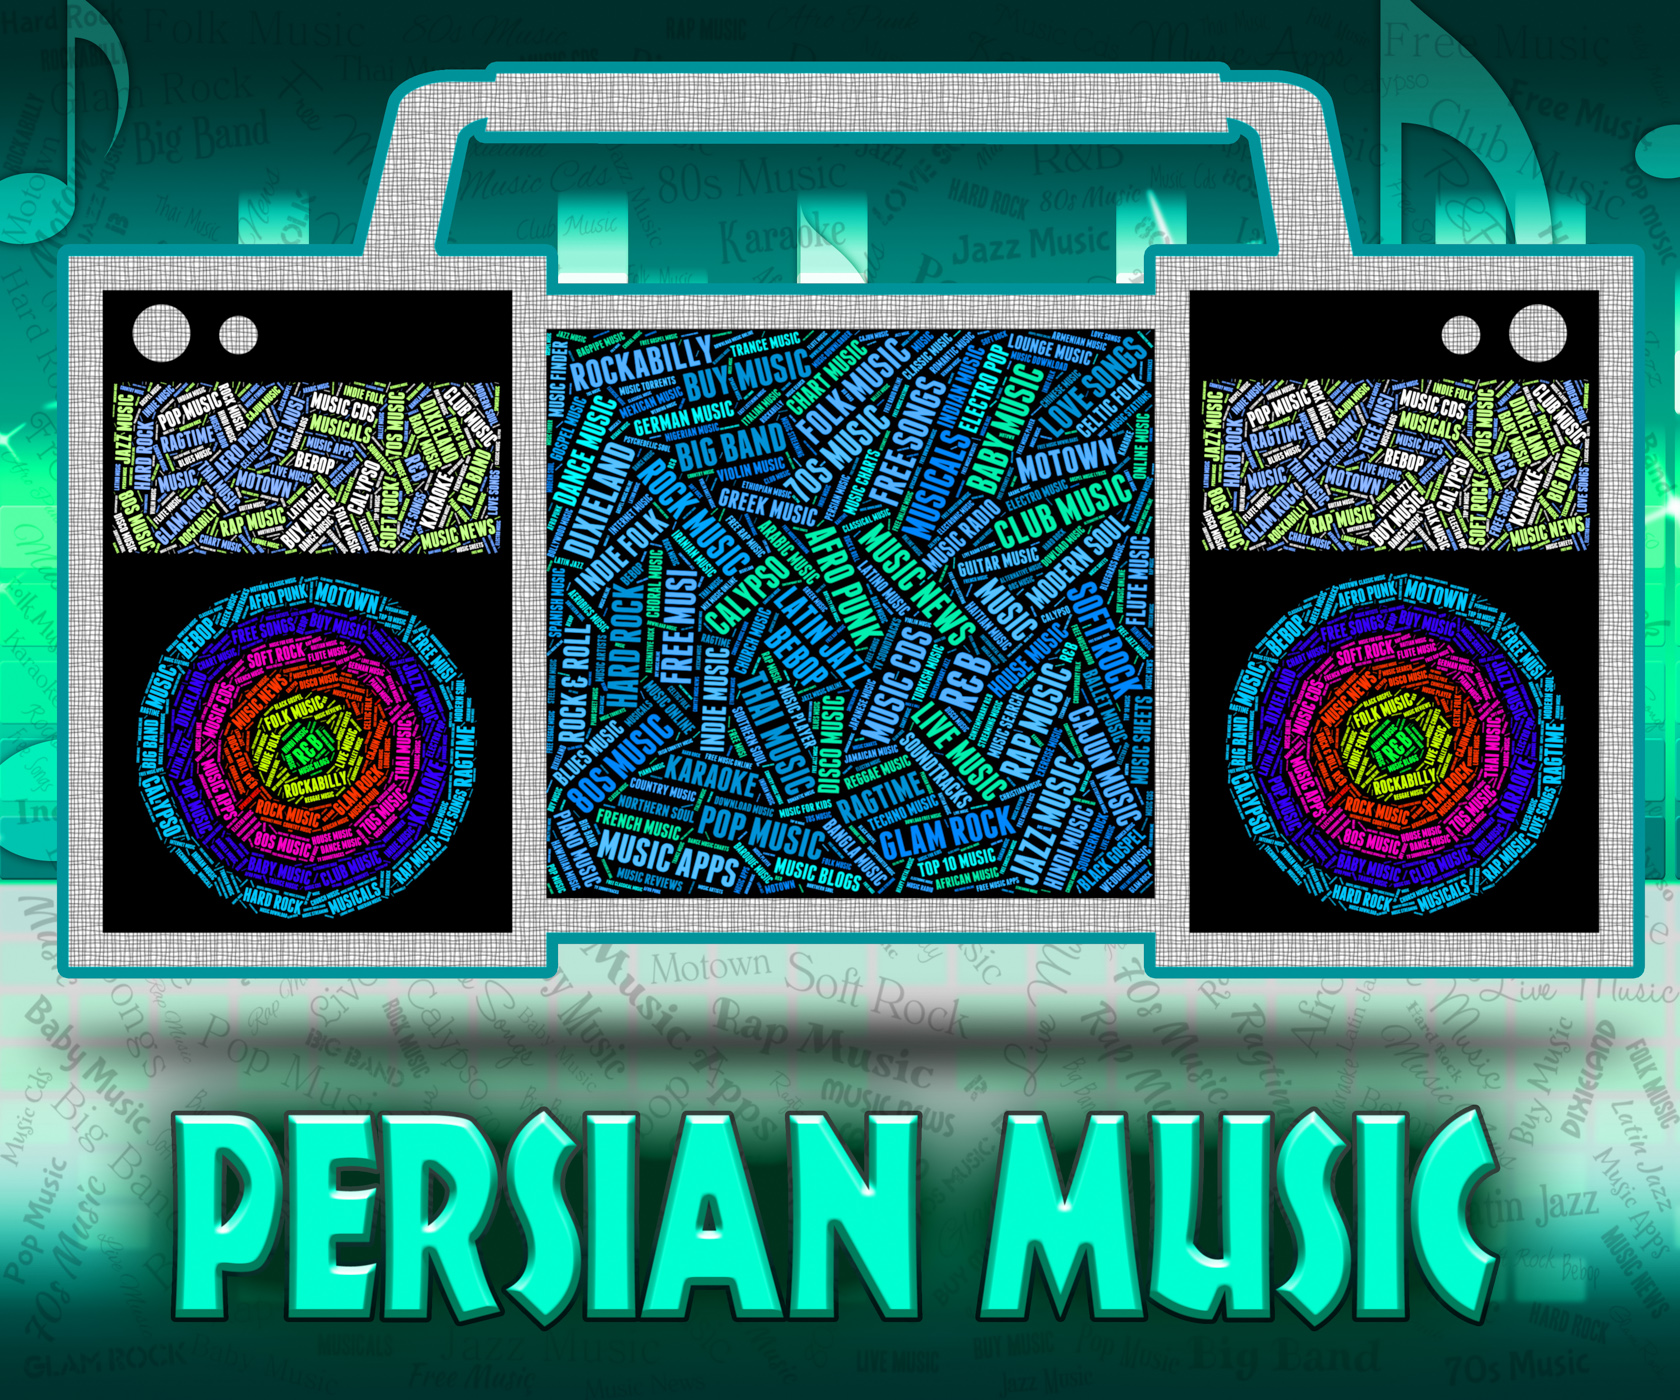 Persian music indicates sound tracks and harmonies photo